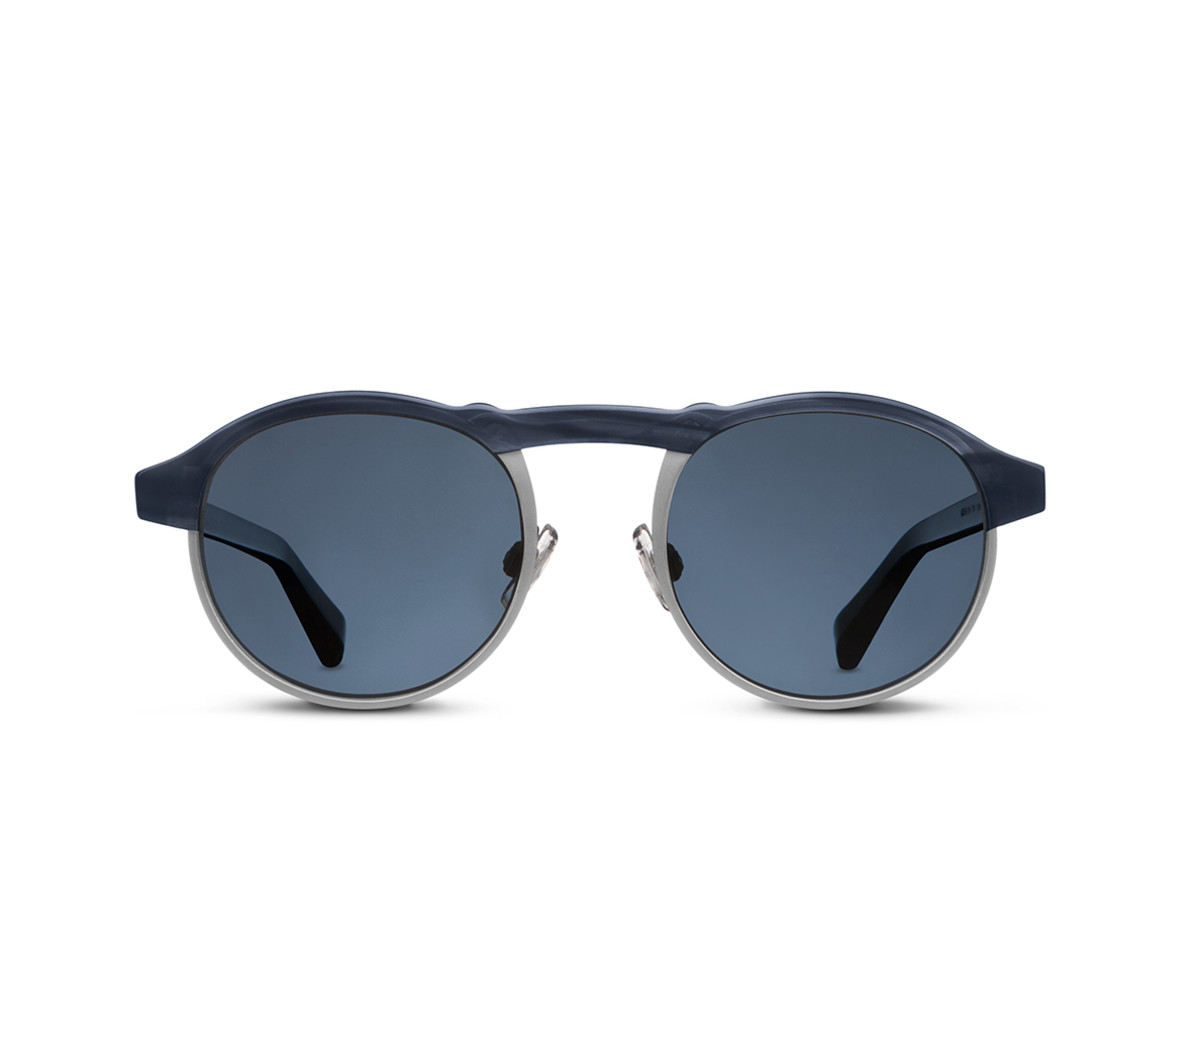 15 Sunglasses Perfect For Summer - Men's Journal